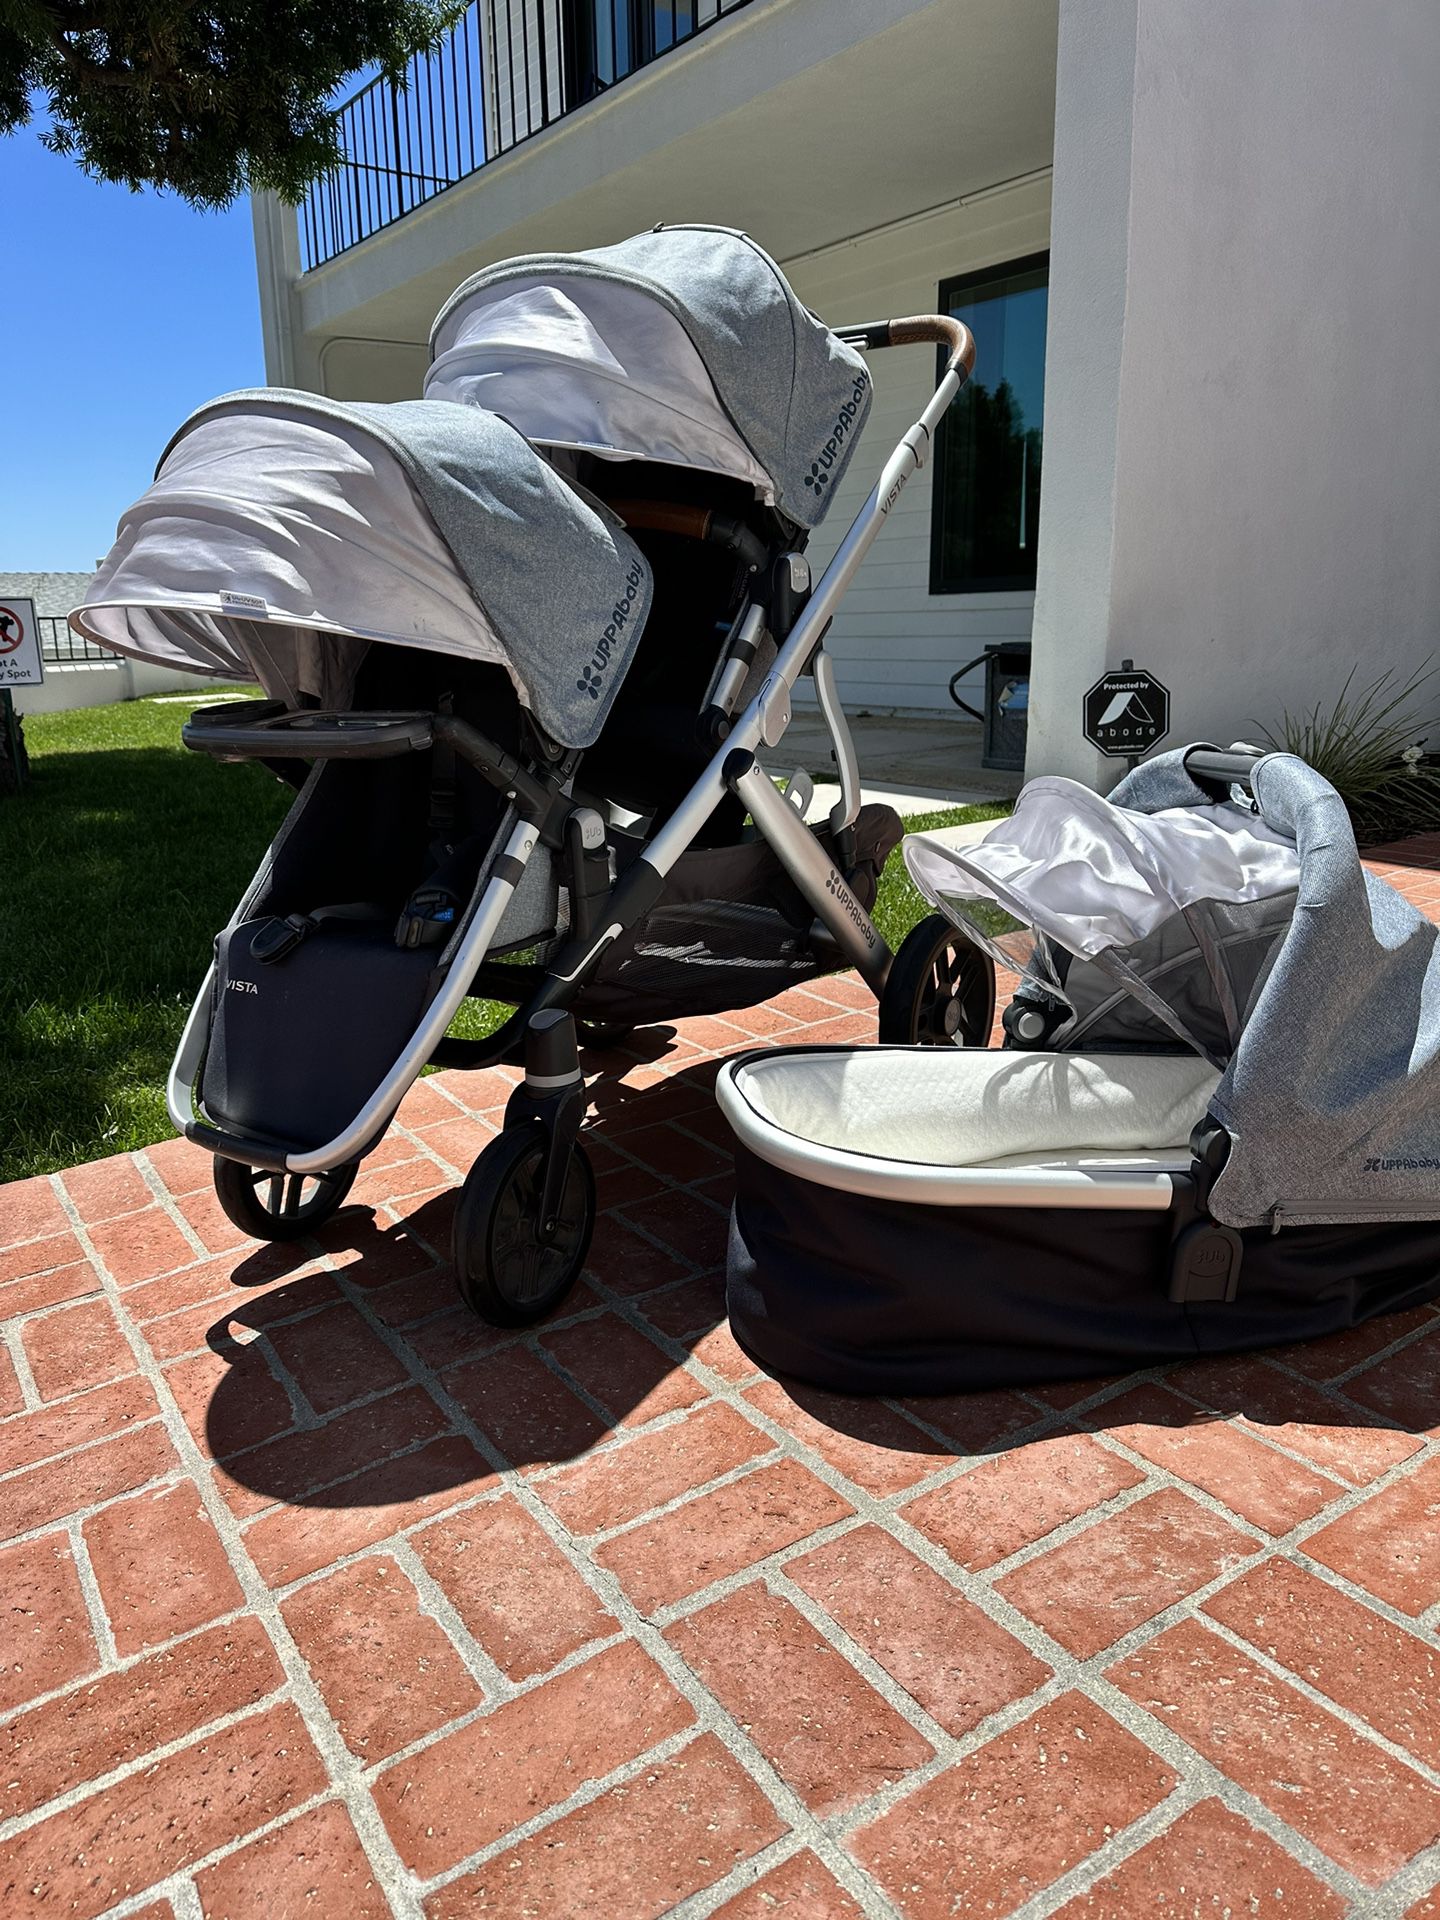 Uppa Baby Vista Double Stroller W/bassinet 